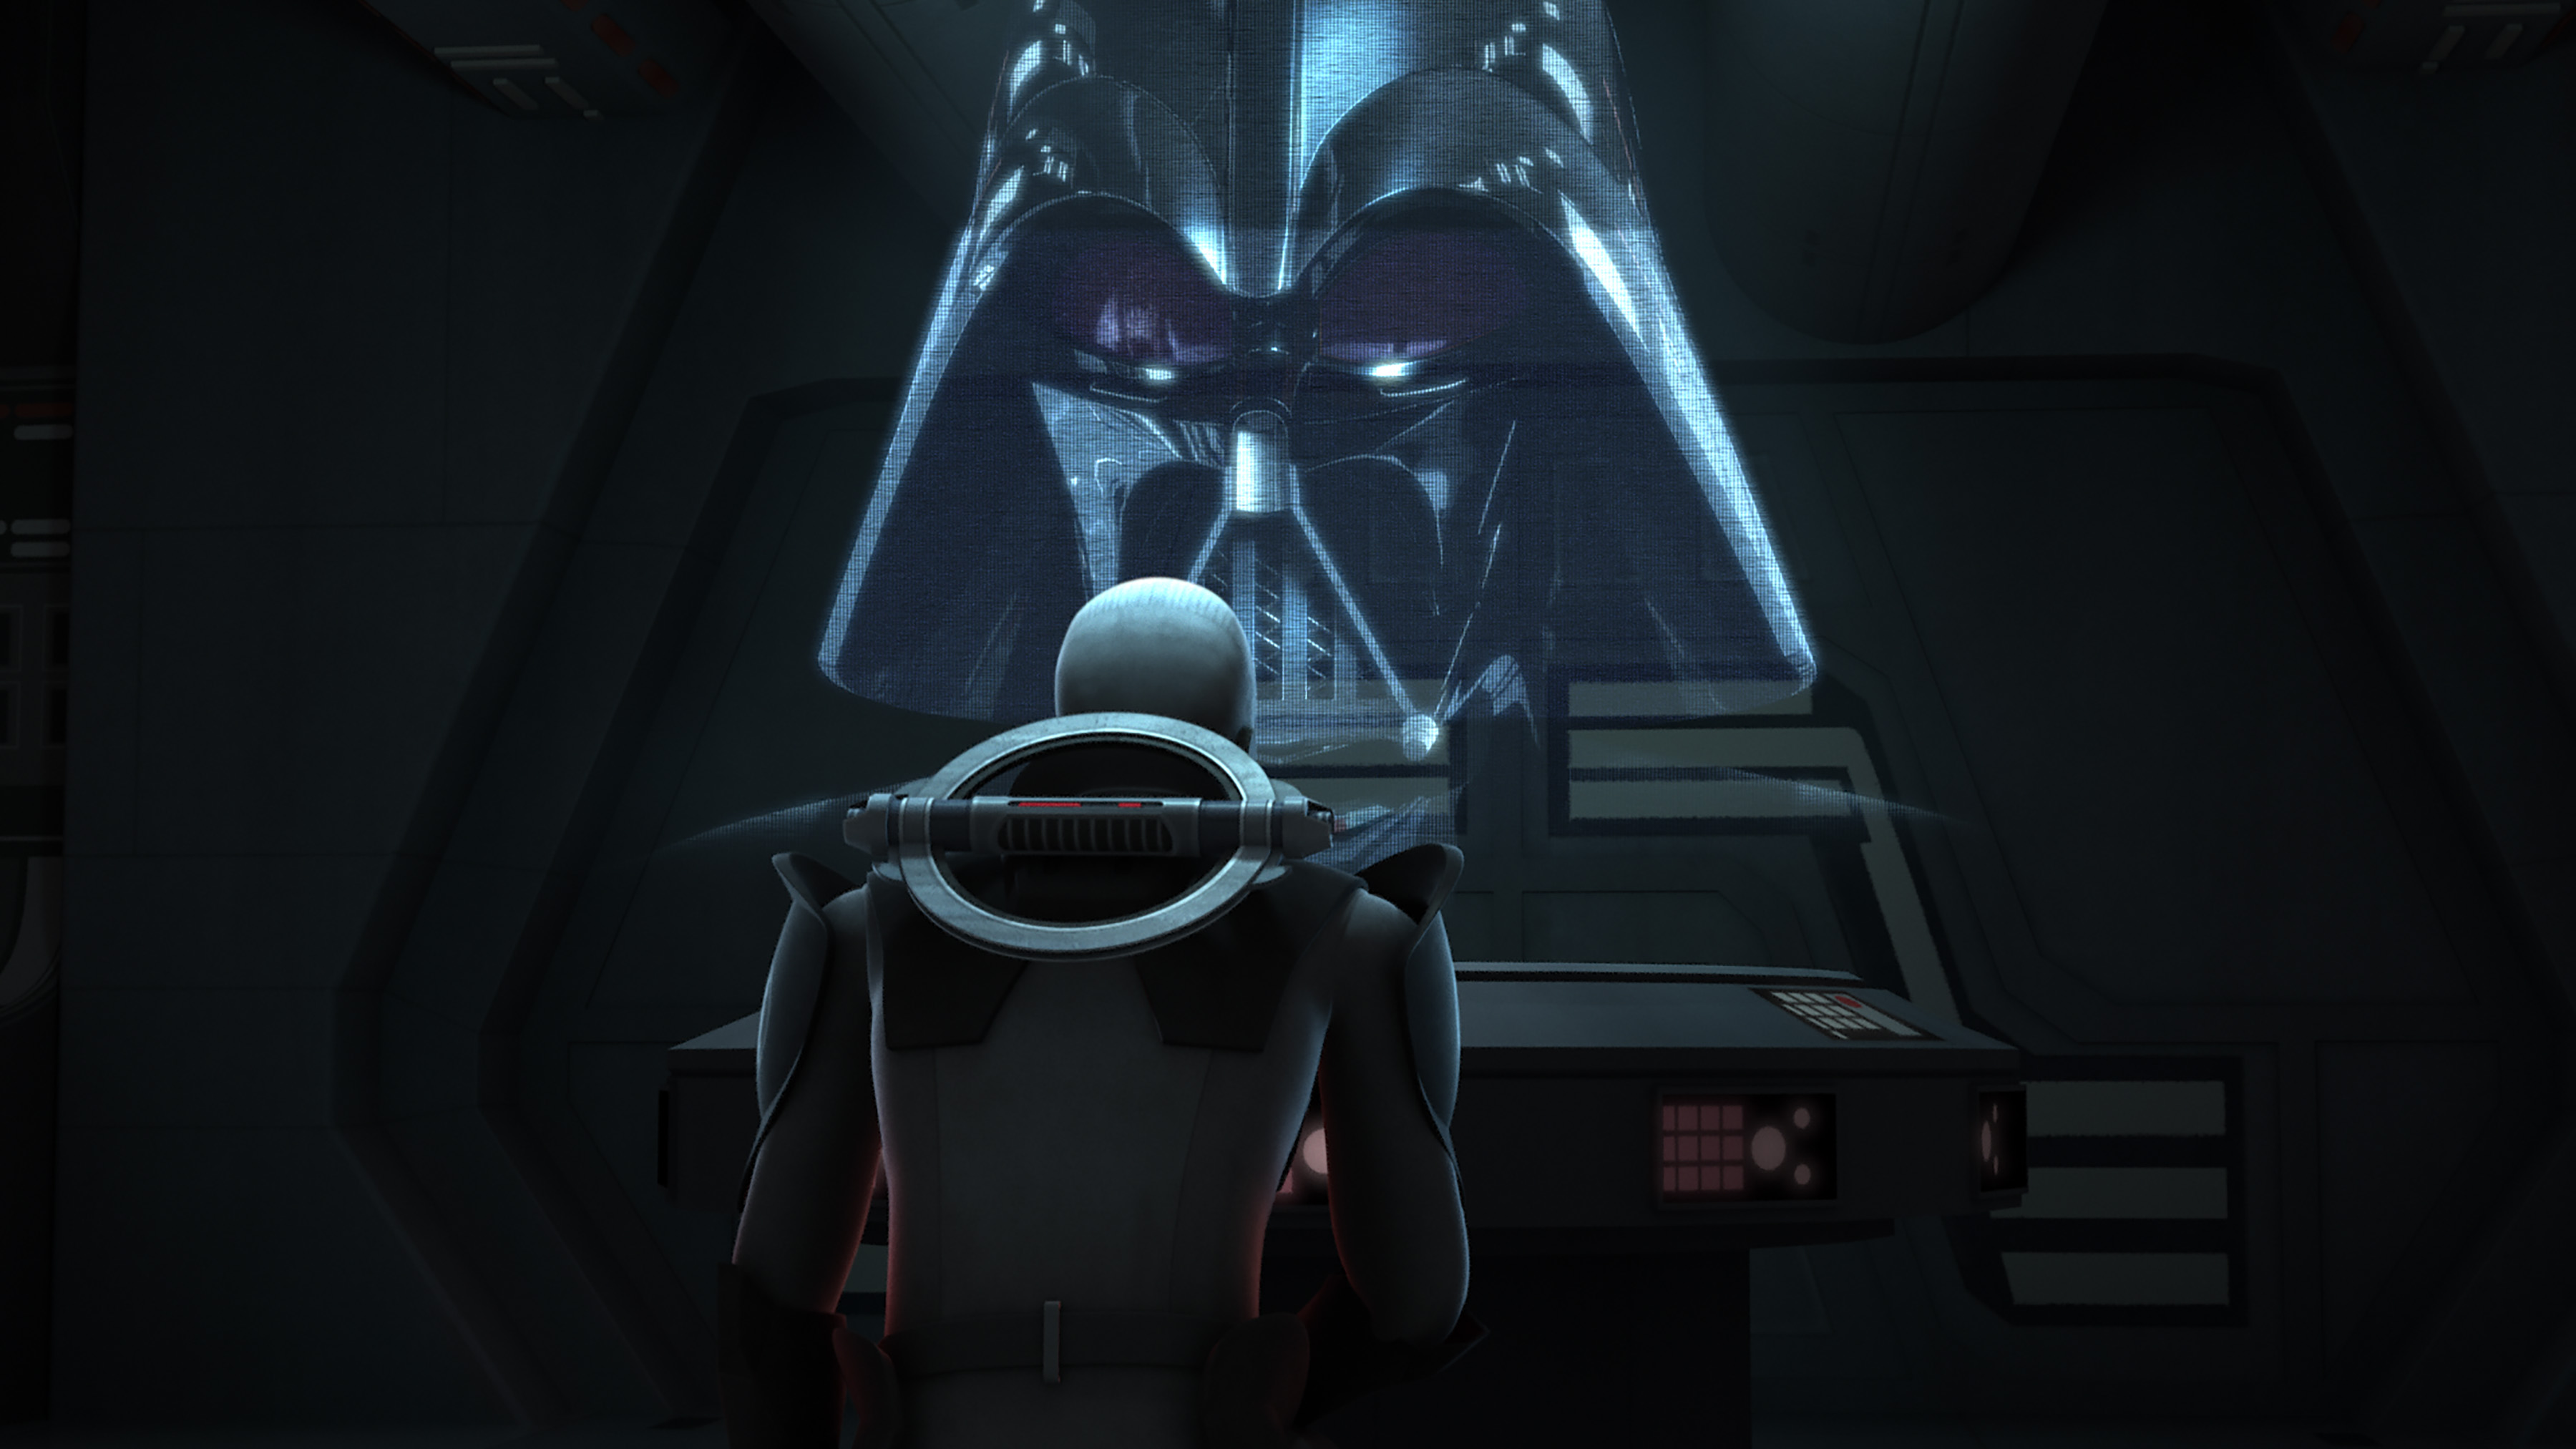 Darth Vader isi face aparitia intr-o editie speciala a filmului "Razboiul Stelelor Rebelii: Scanteia Rebeliunii" luni, 1 decembrie, la Disney Channel